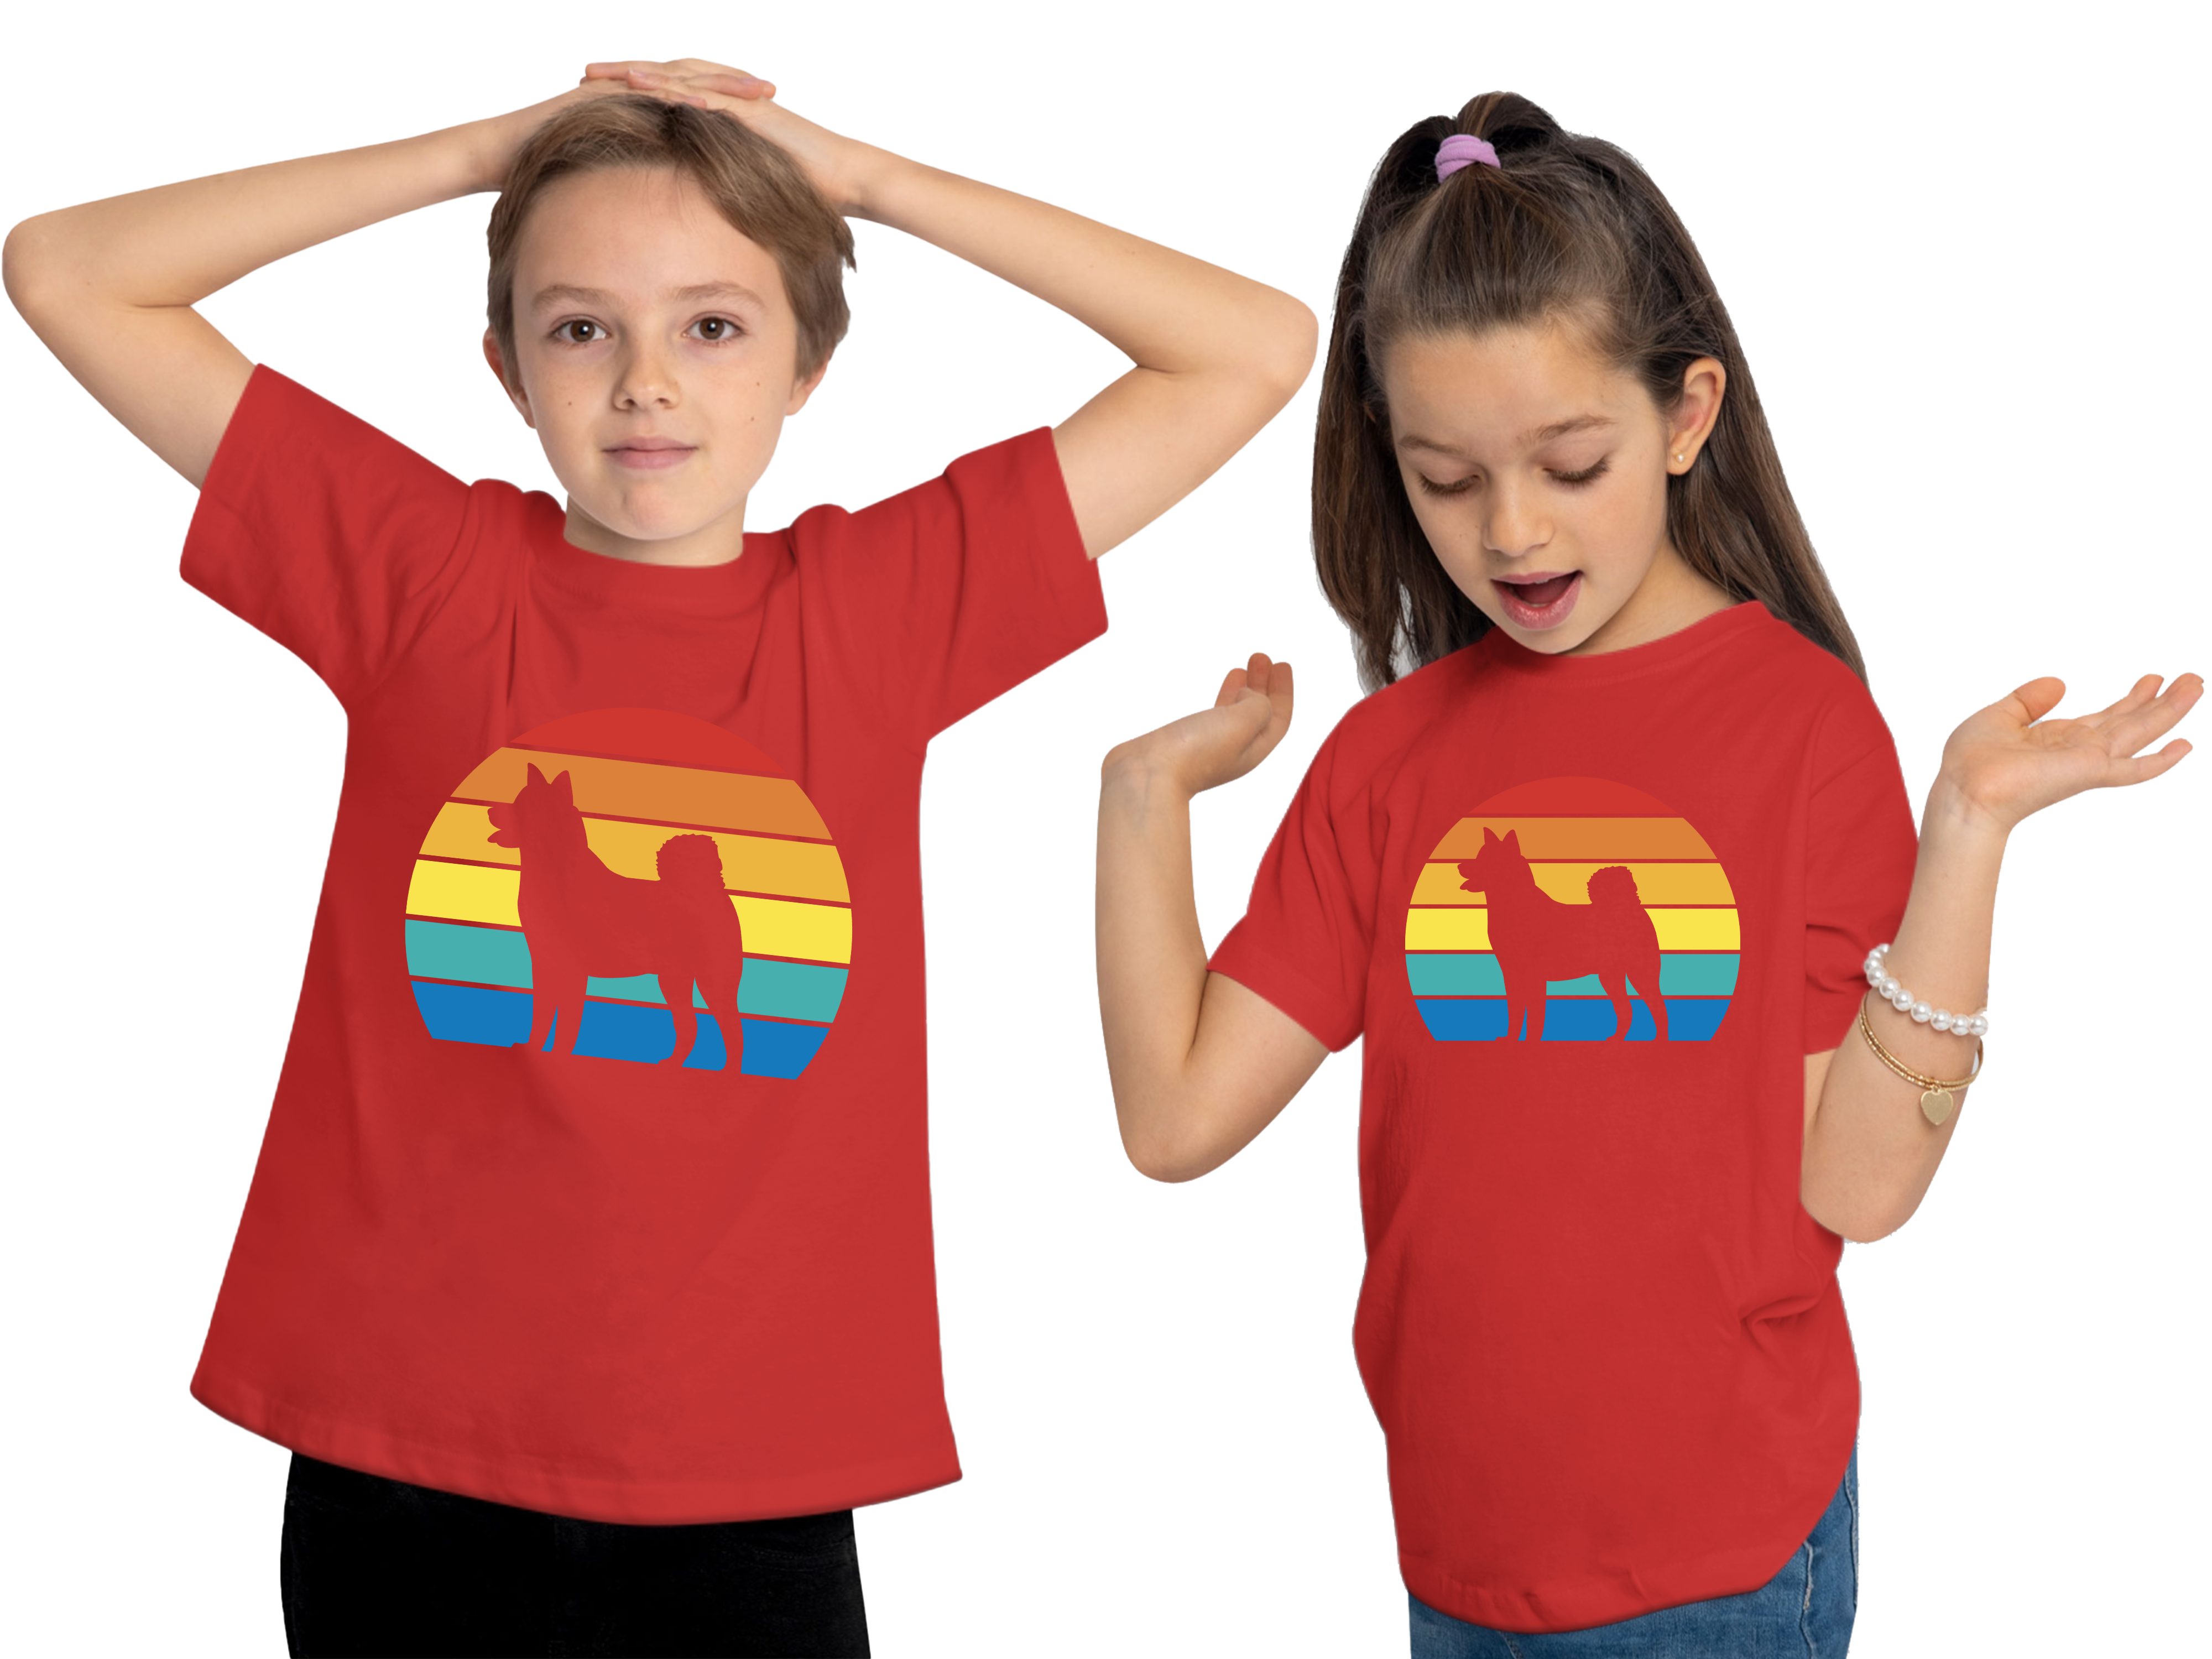 MyDesign24 Print-Shirt Kinder Hunde Retro Aufdruck, Baumwollshirt Bild i236 bedruckt T-Shirt - mit rot Akita